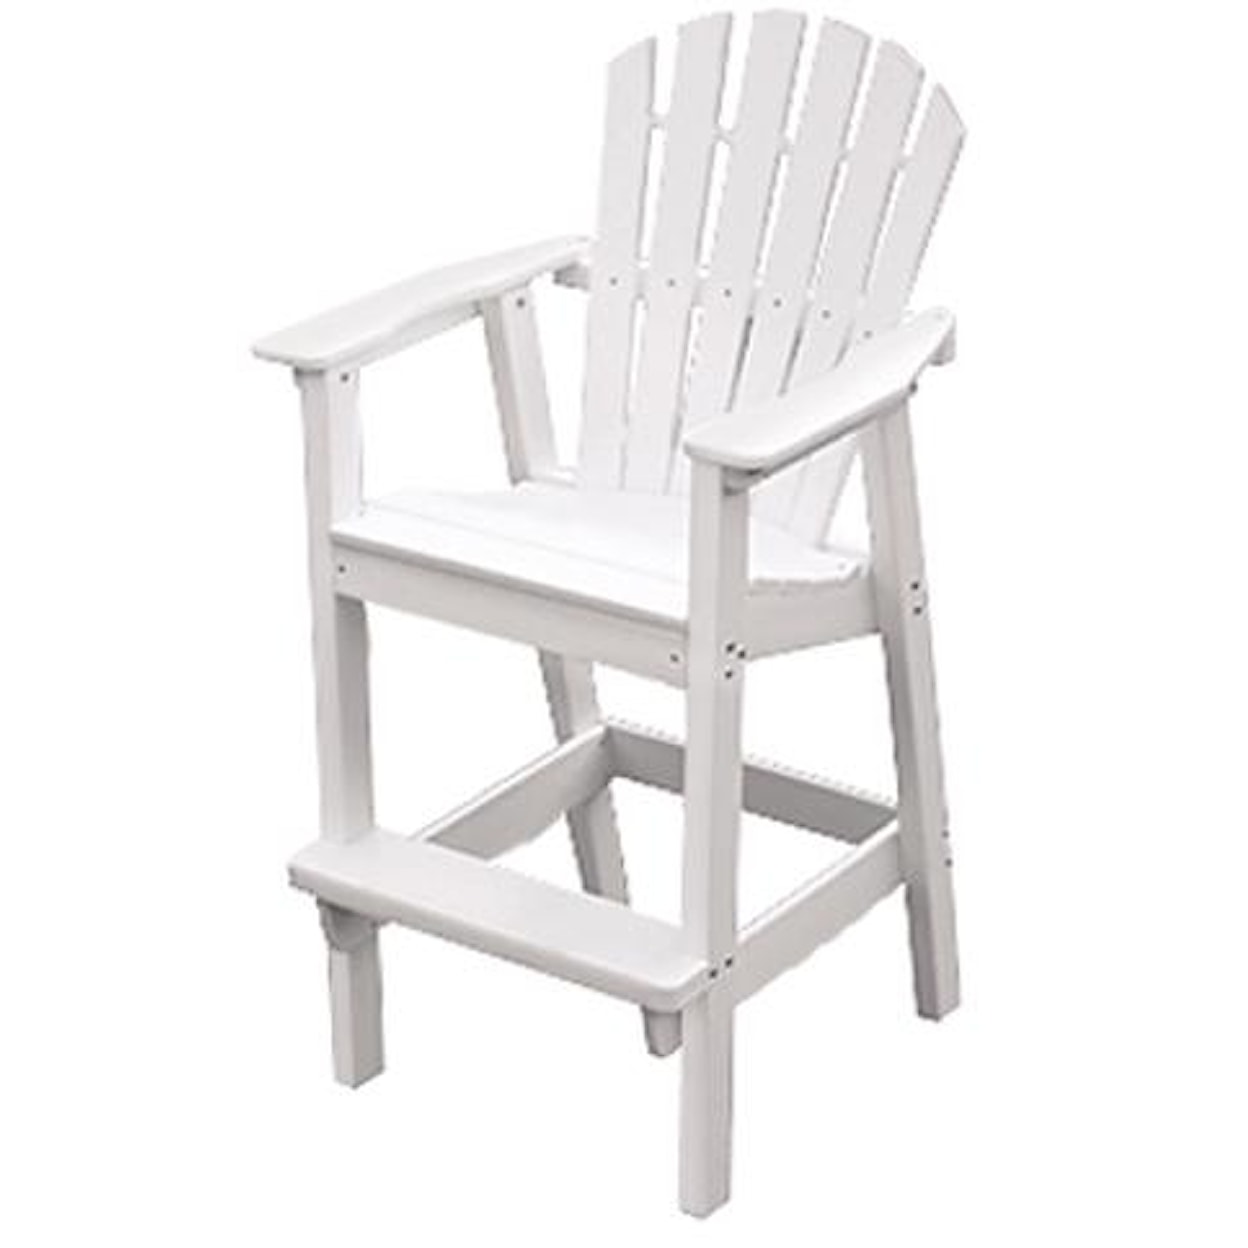 Seaside Casual Adirondack Shellback Bar Chair